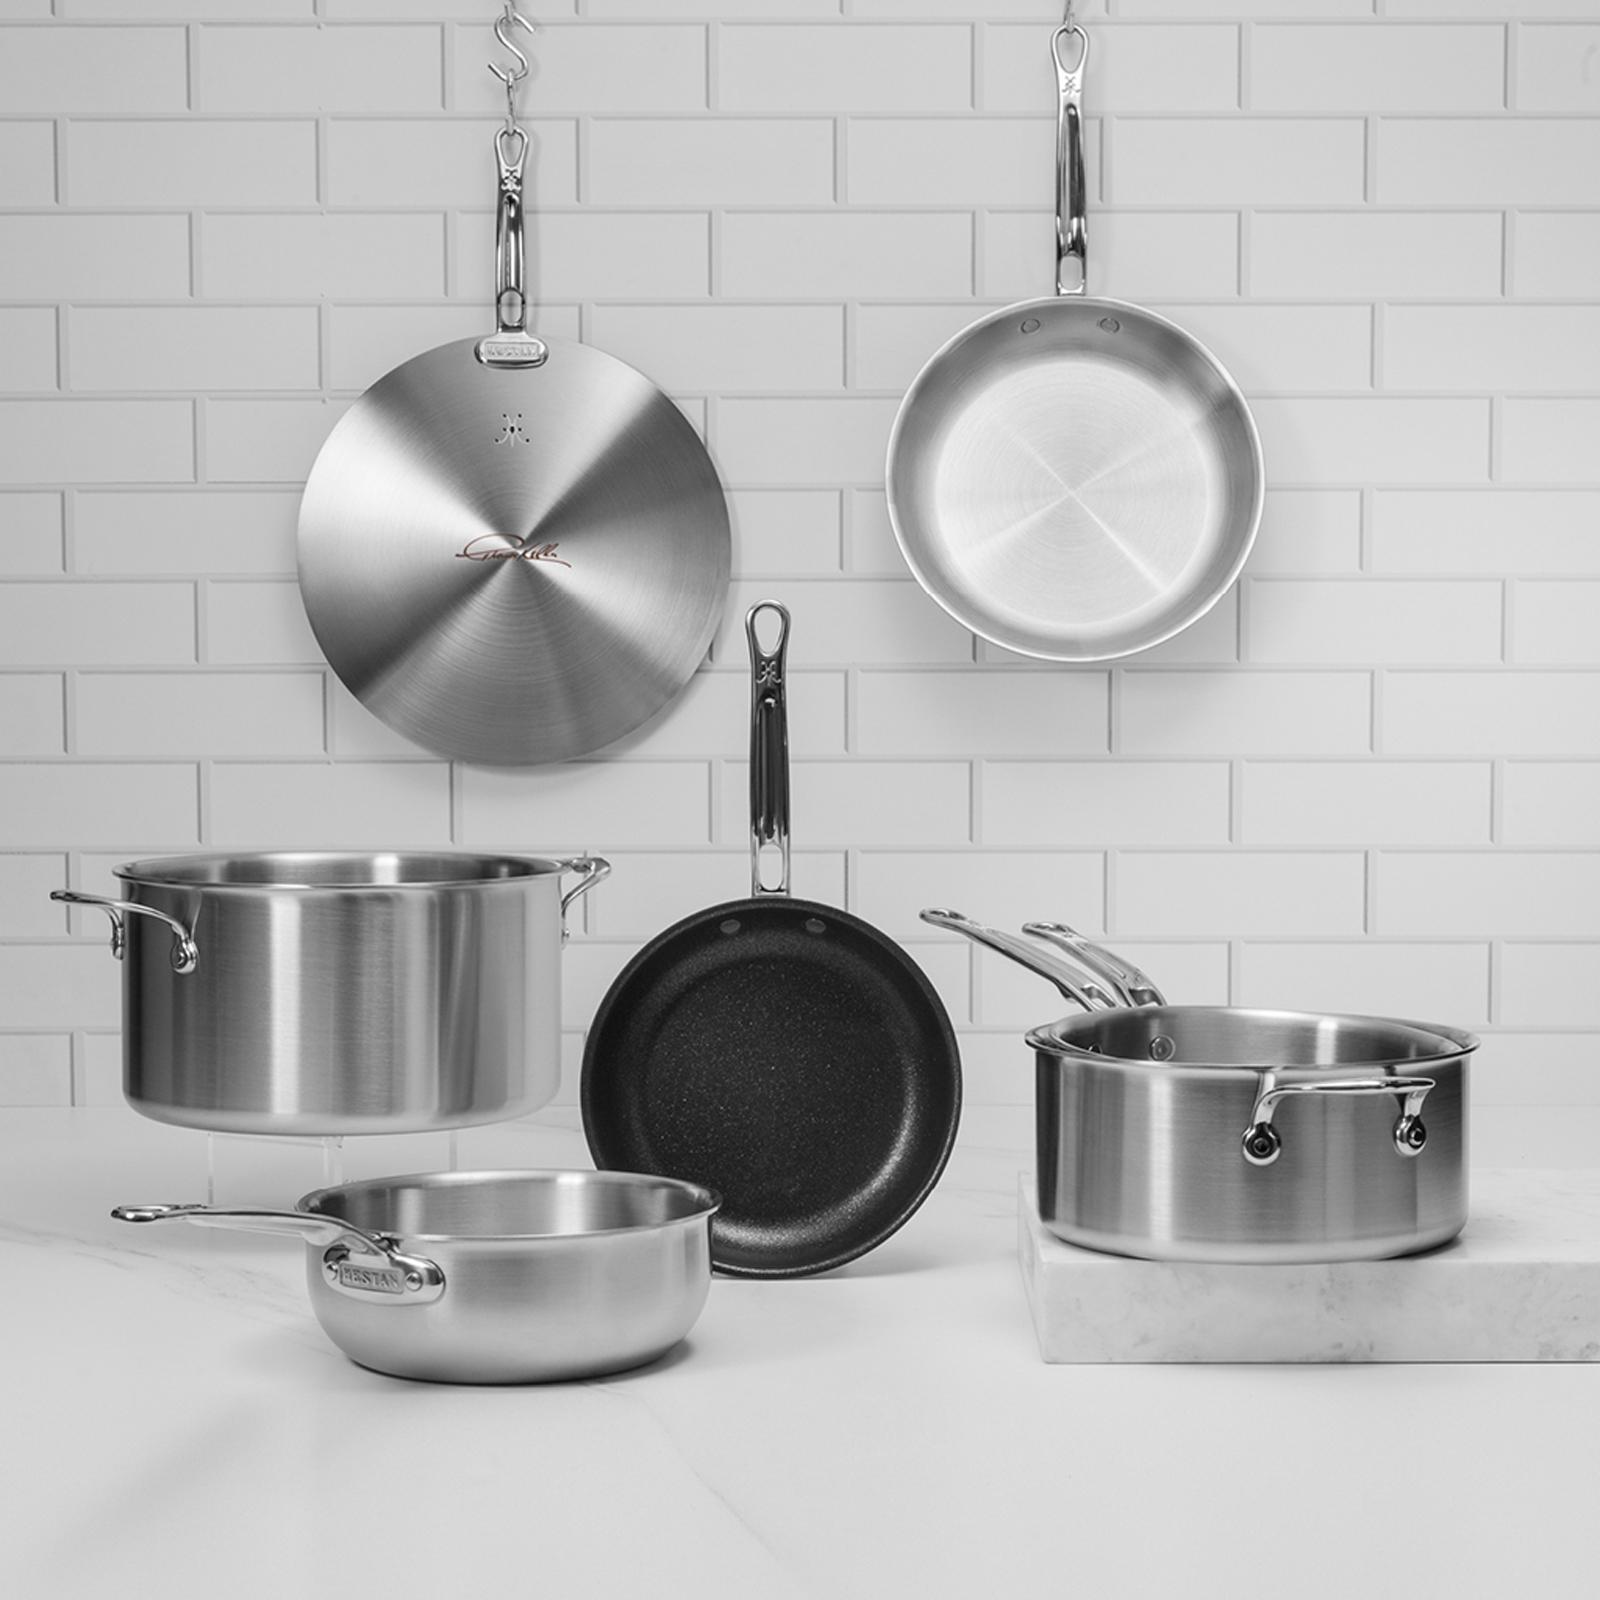 Hestan Thomas Keller Insignia 7 Piece Cookware Set